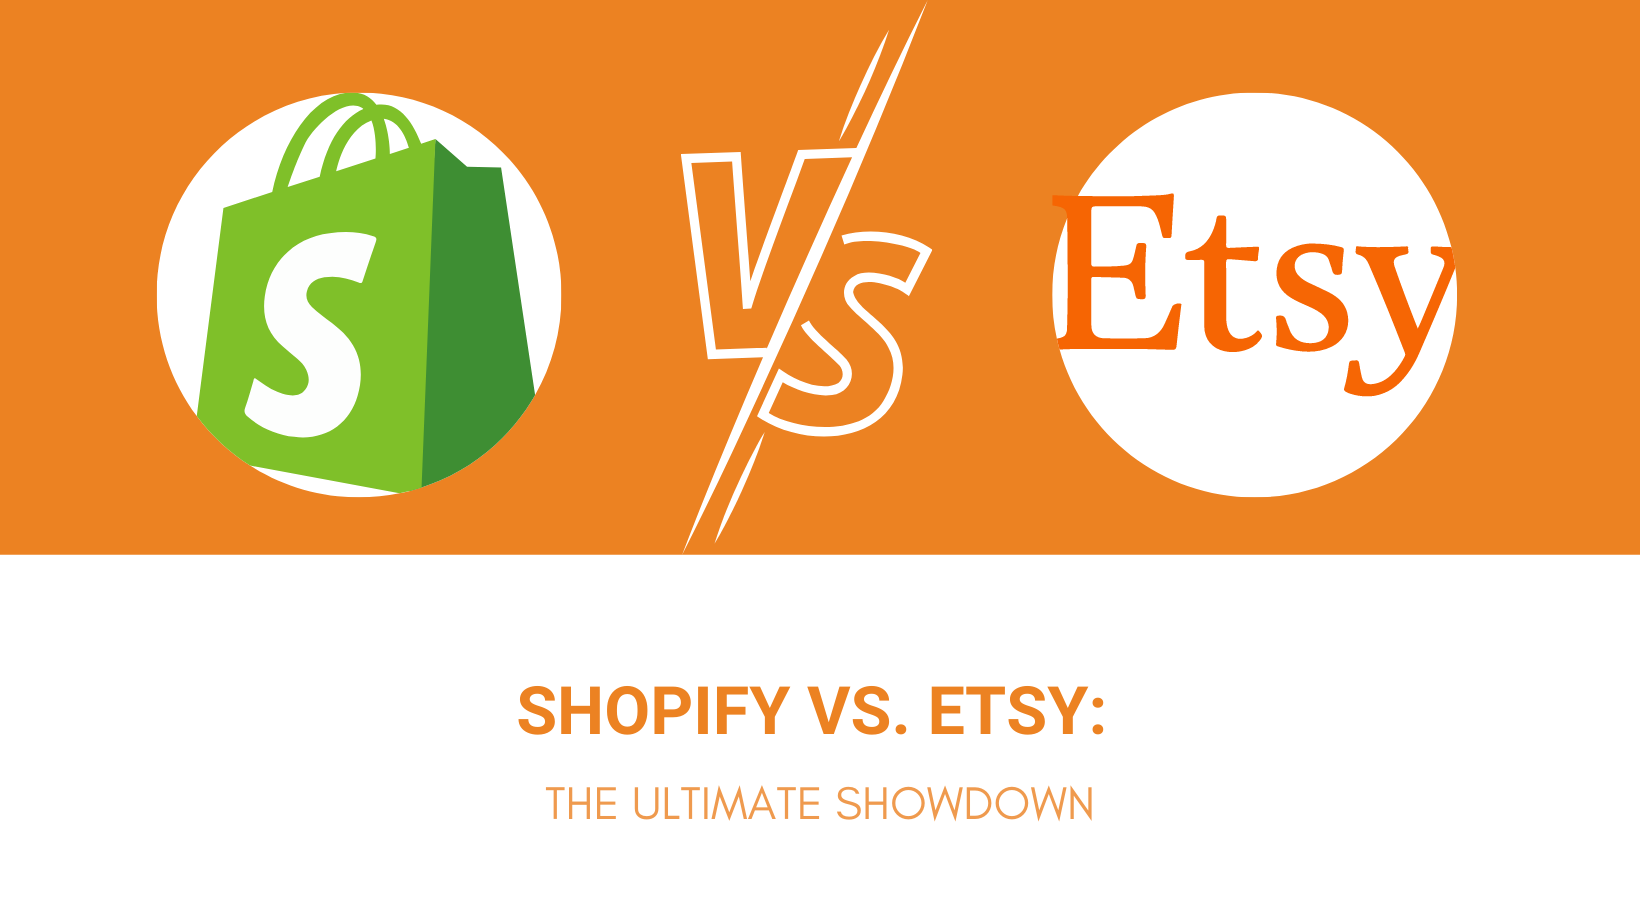 SHOPIFY VS. ETSY THE ULTIMATE SHOWDOWN